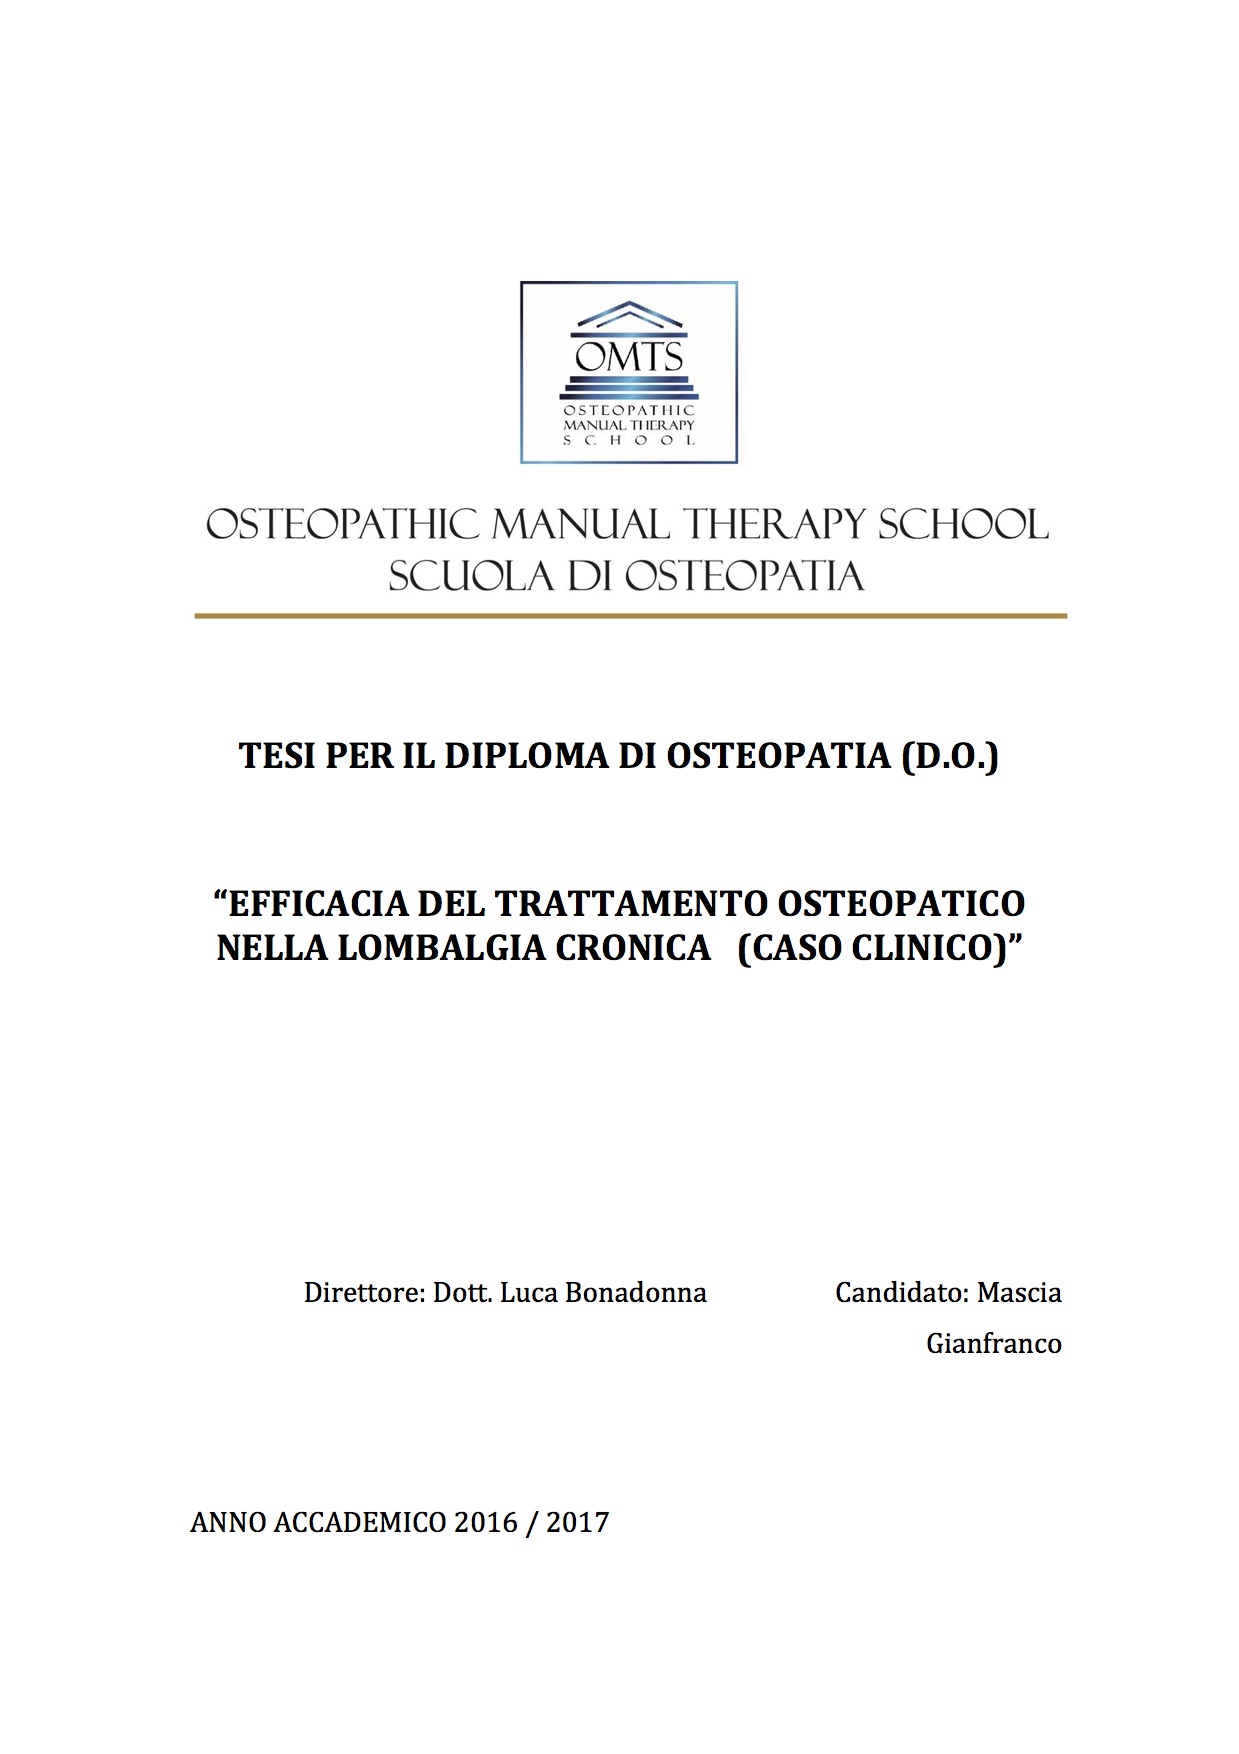 Gianfranco Mascia Tesi Diploma Osteopatia 2017